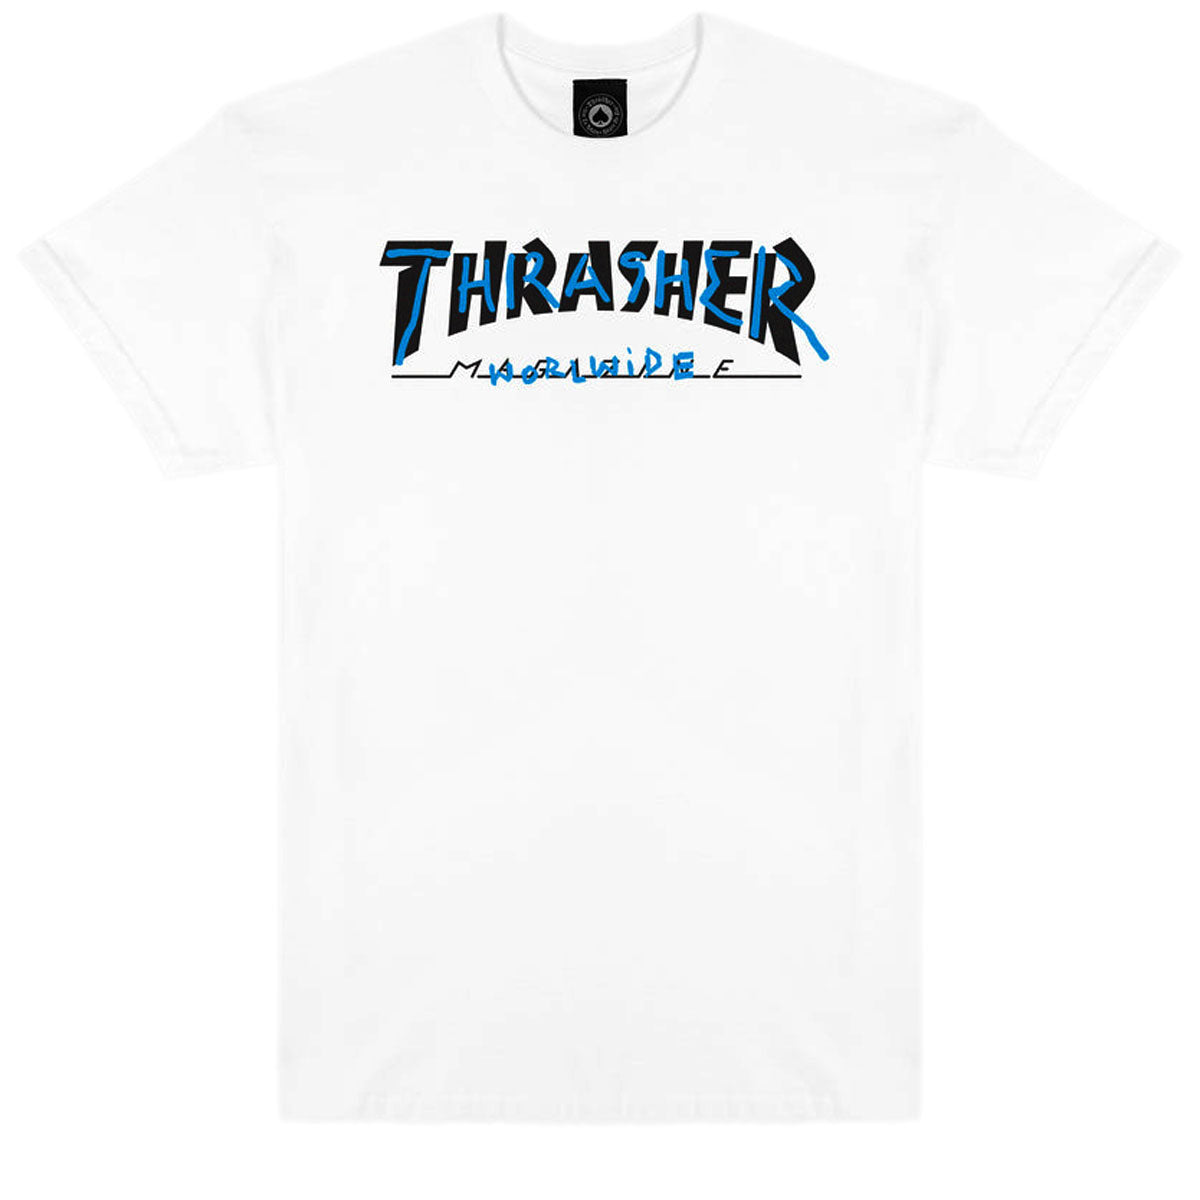 Thrasher Trademark T-Shirt - White image 1